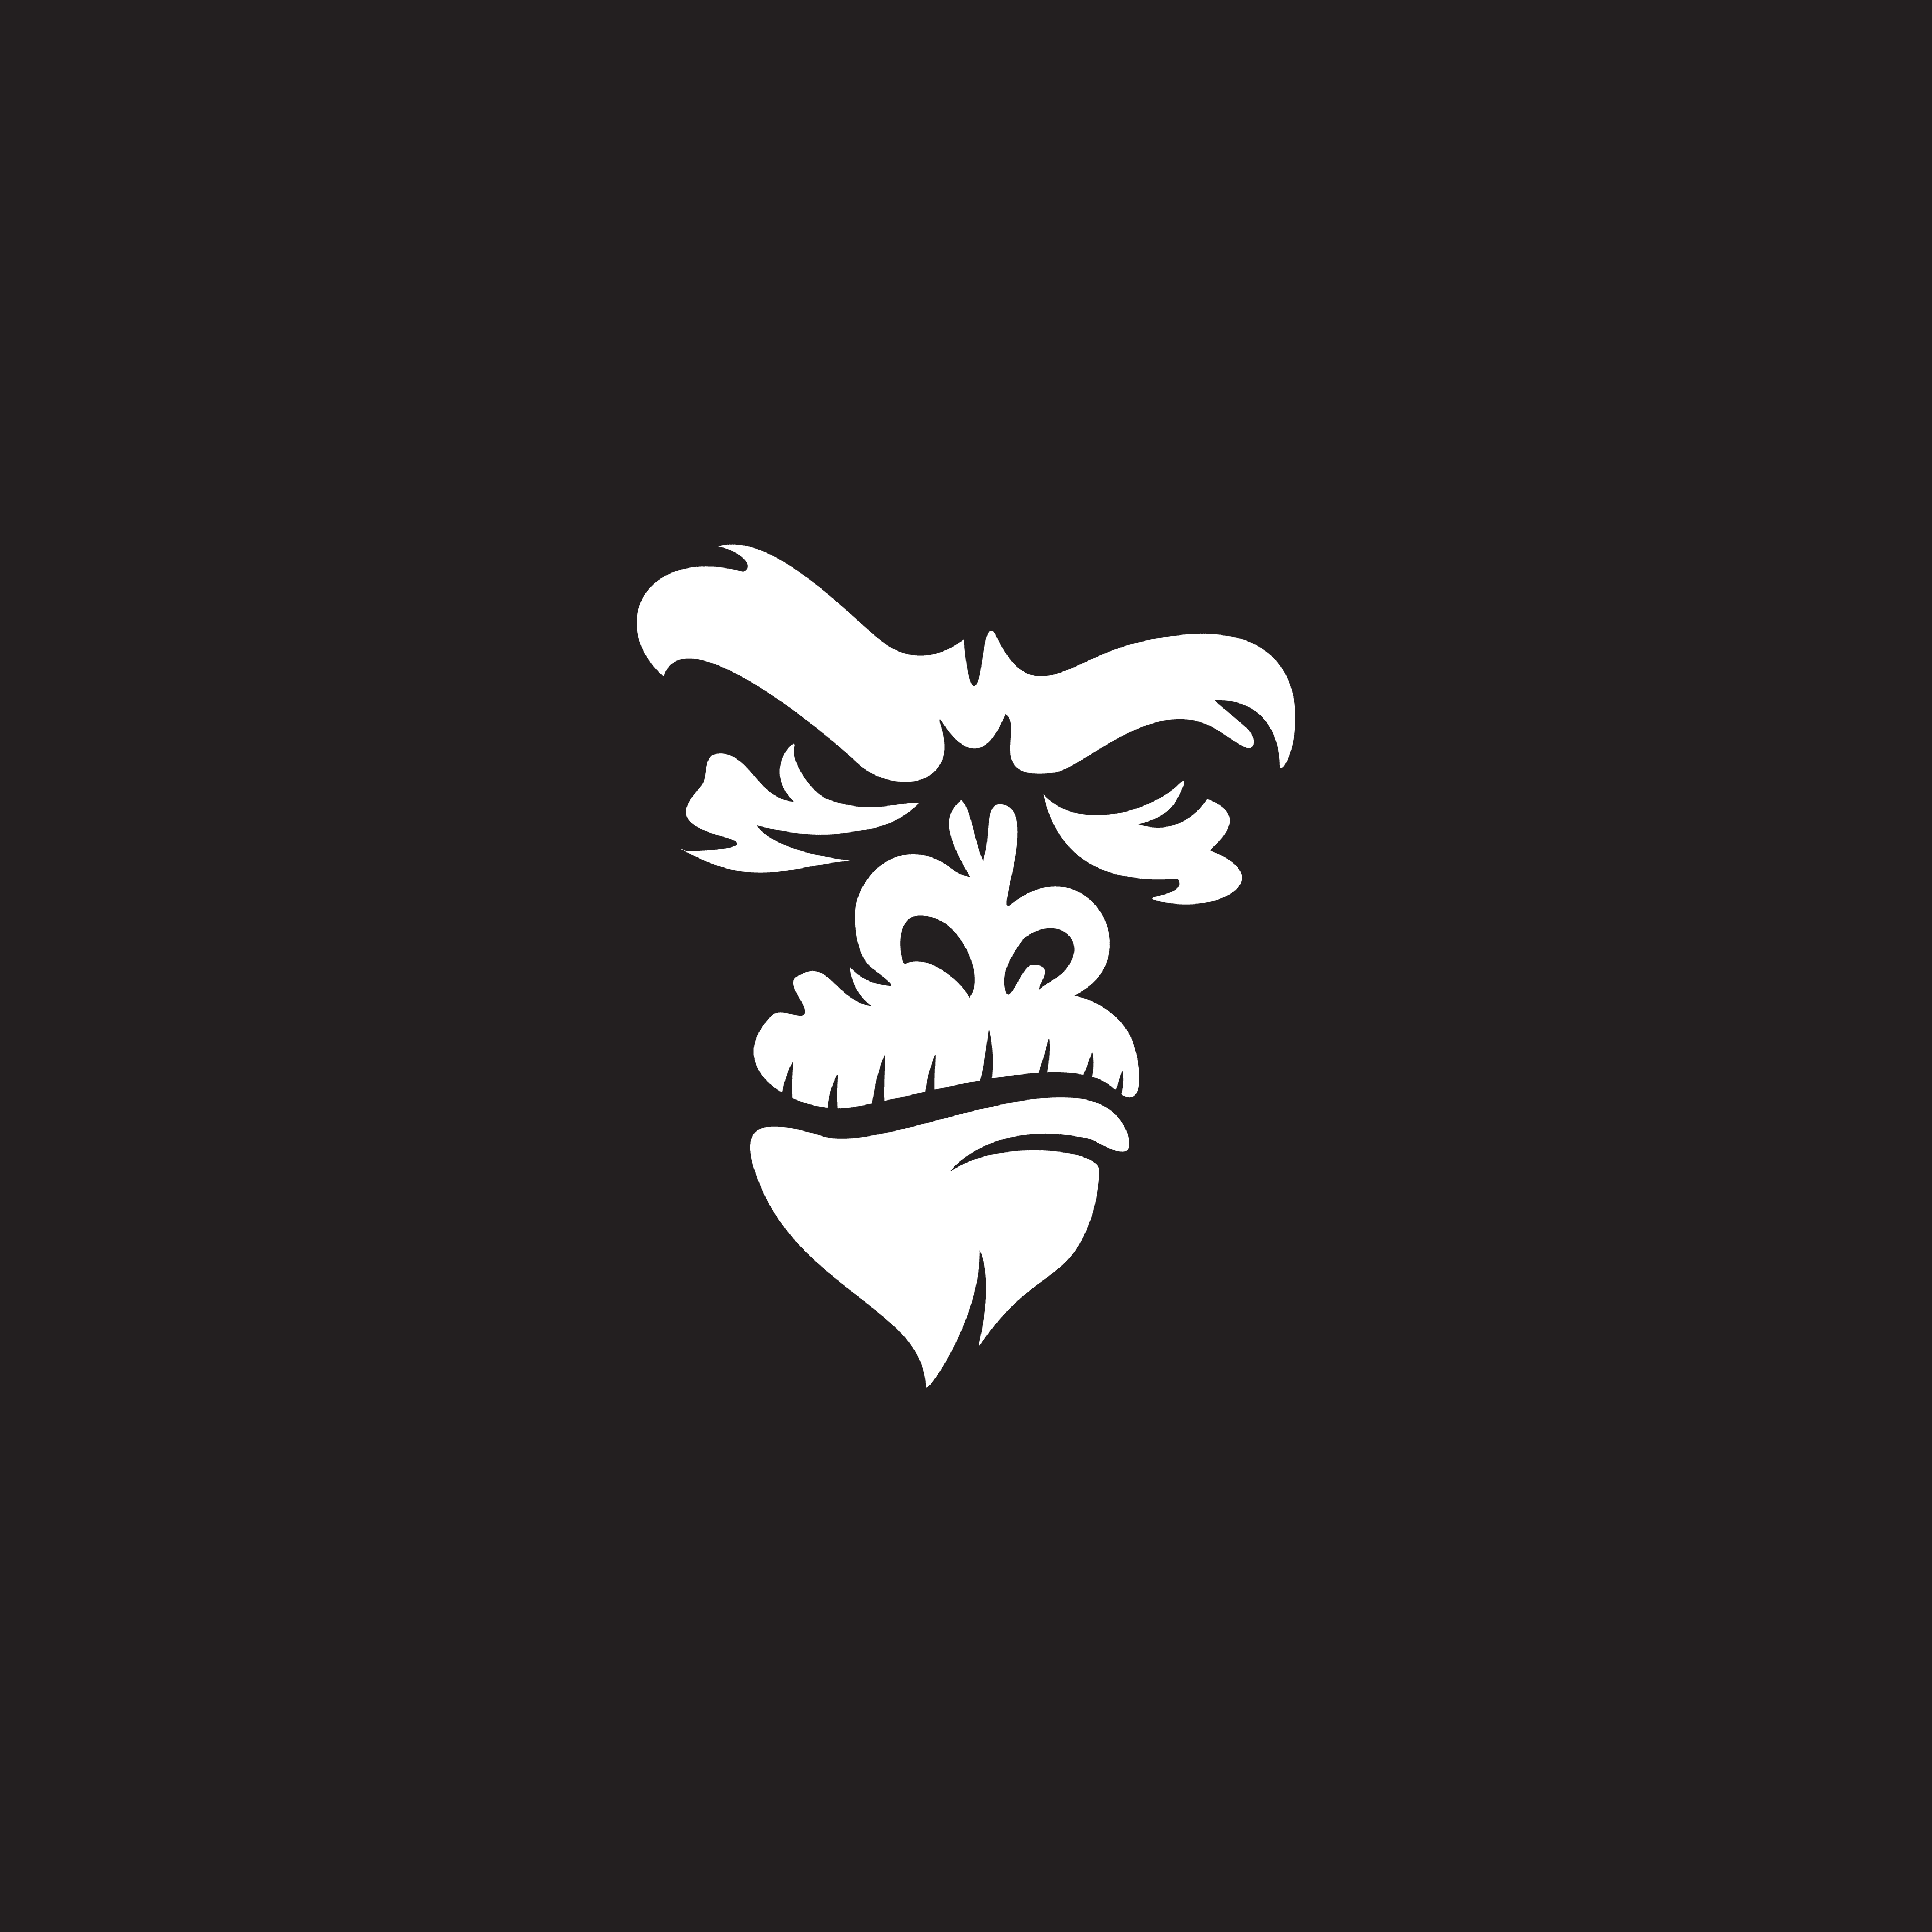 Super Apes Club: Genesis